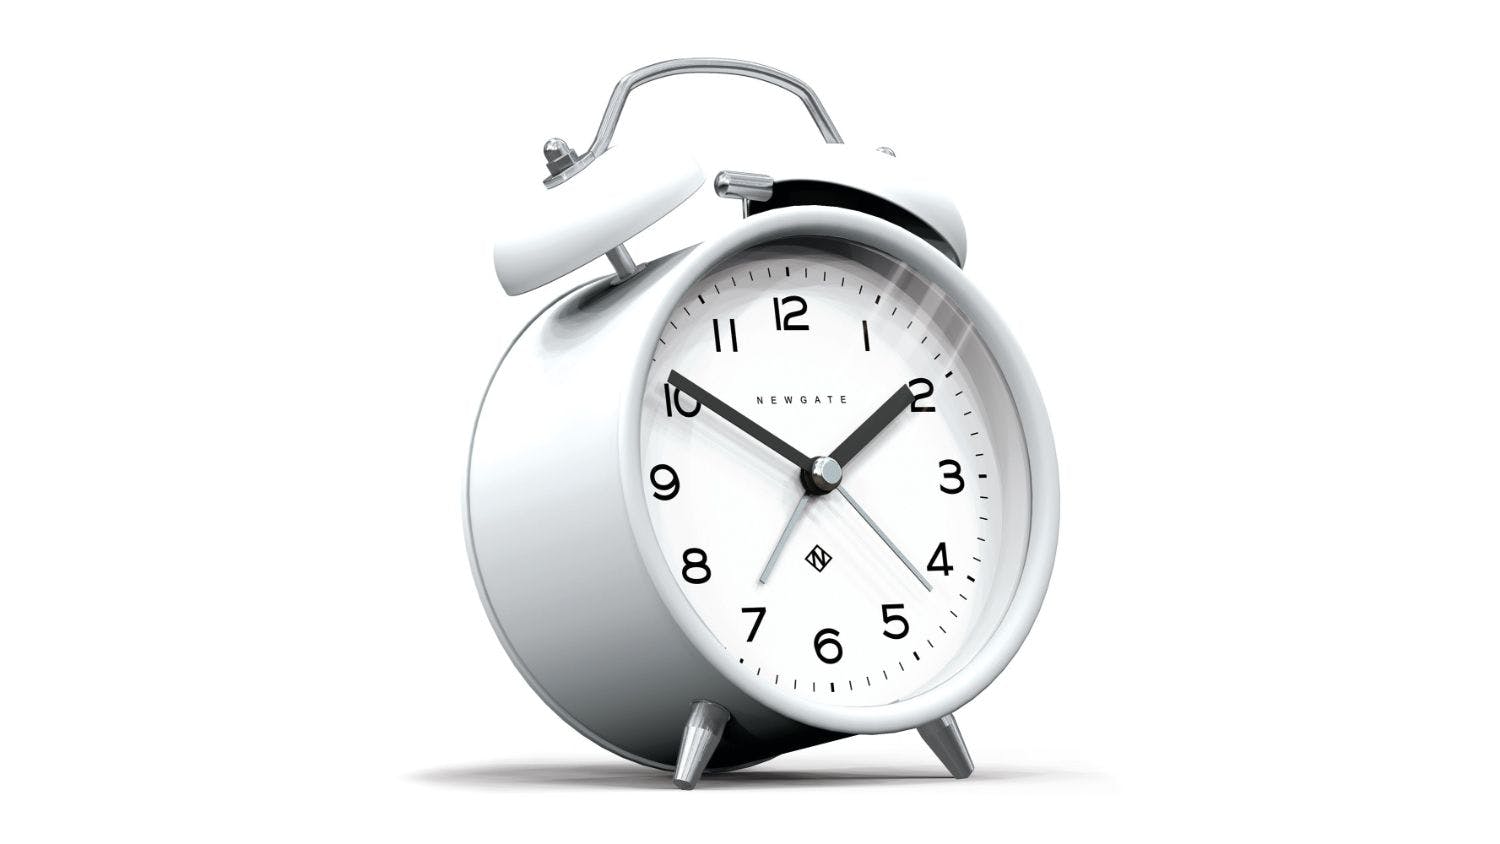 Newgate "Charlie Bell Echo" Classic Alarm Clock - Pebble White